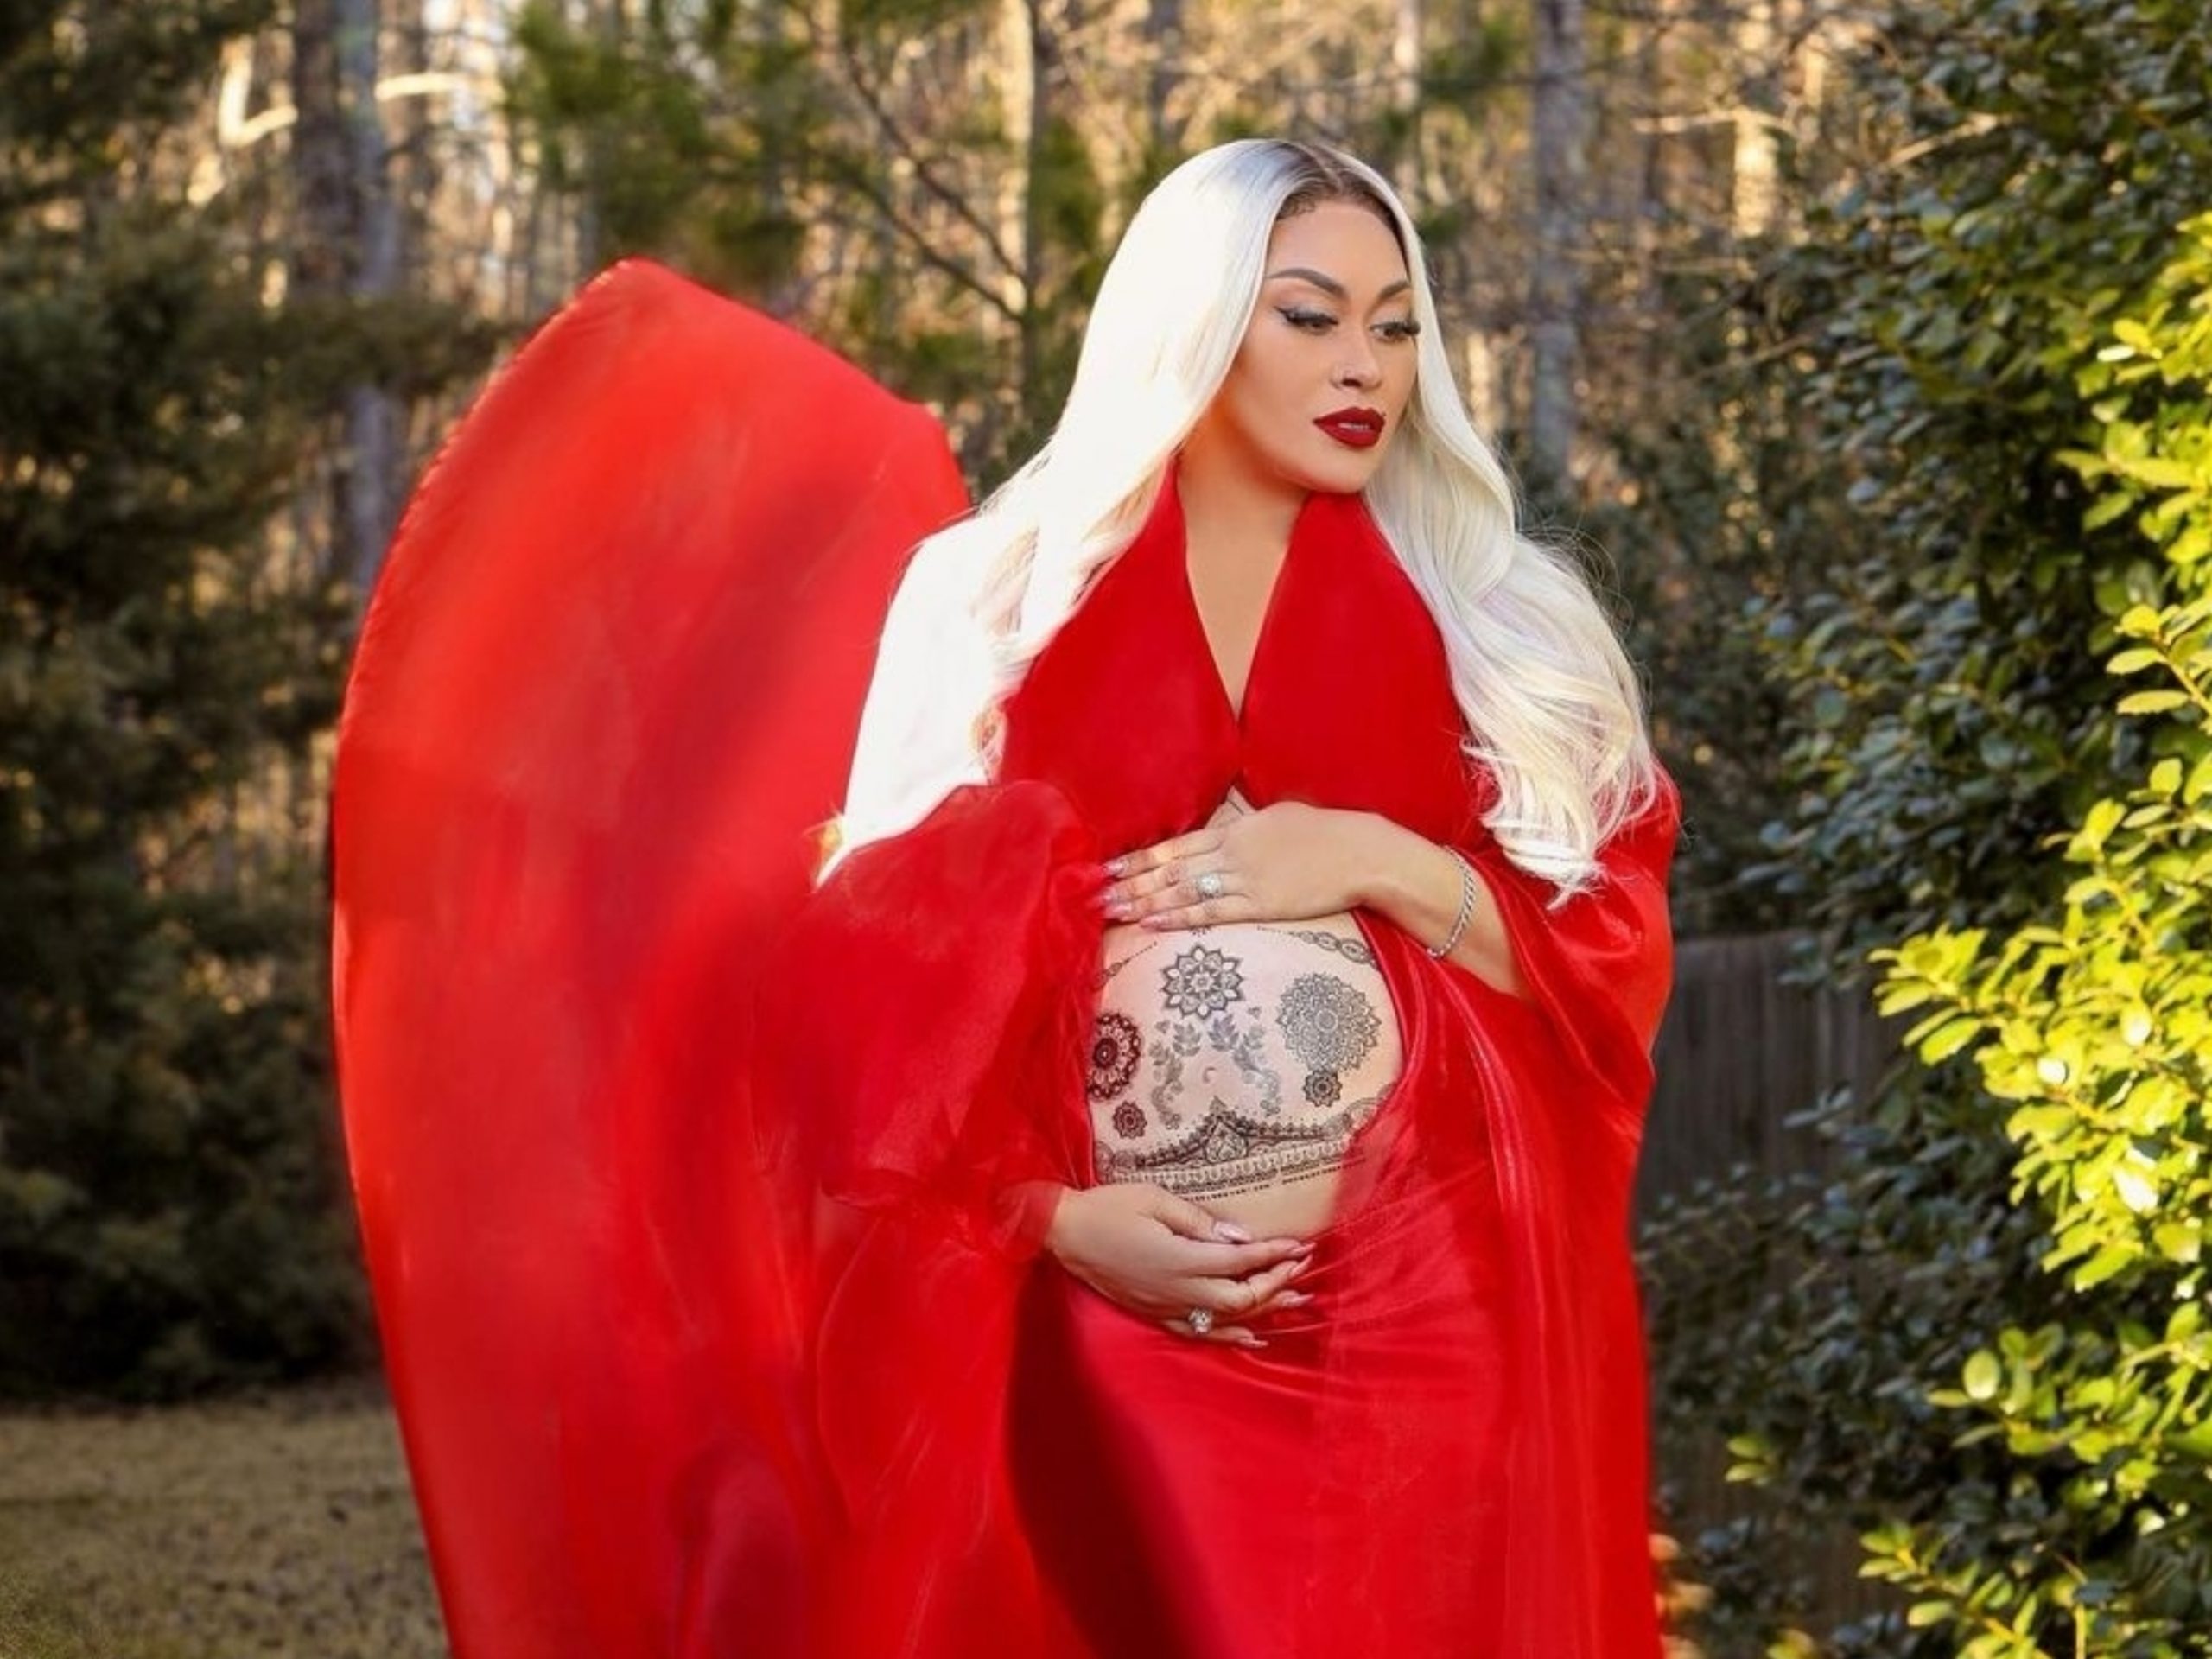 Keke Wyatt Reveals Her Unborn Baby Has A Genetic Disorder